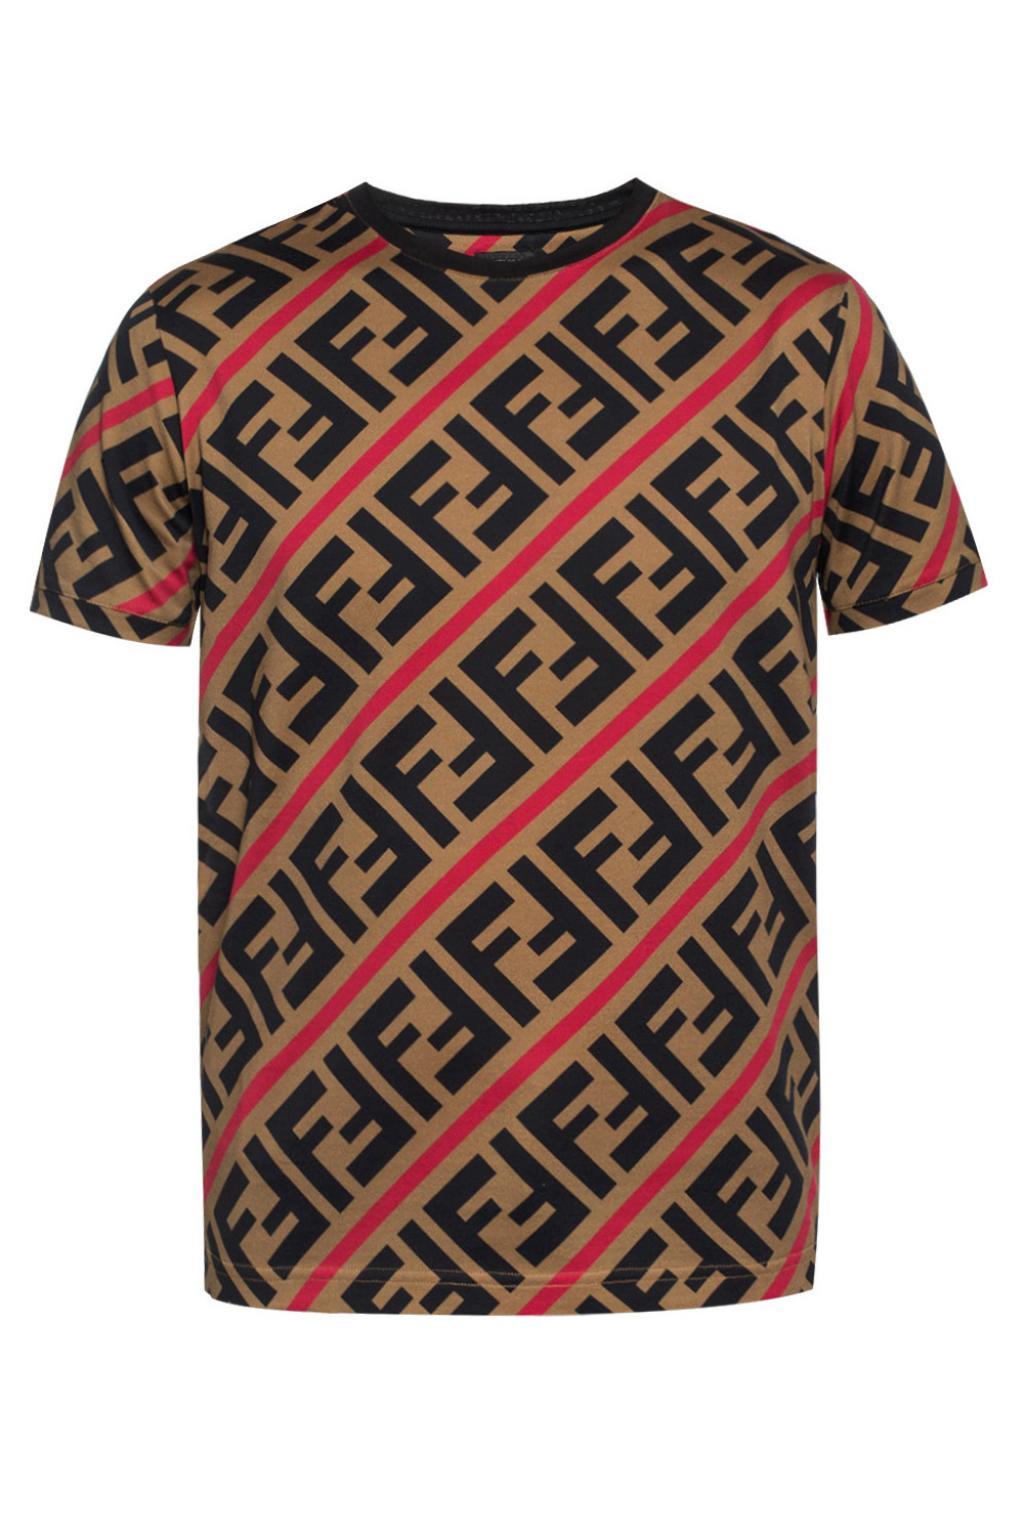 Fendi Double F Logo T-shirt in Brown for Men | Lyst